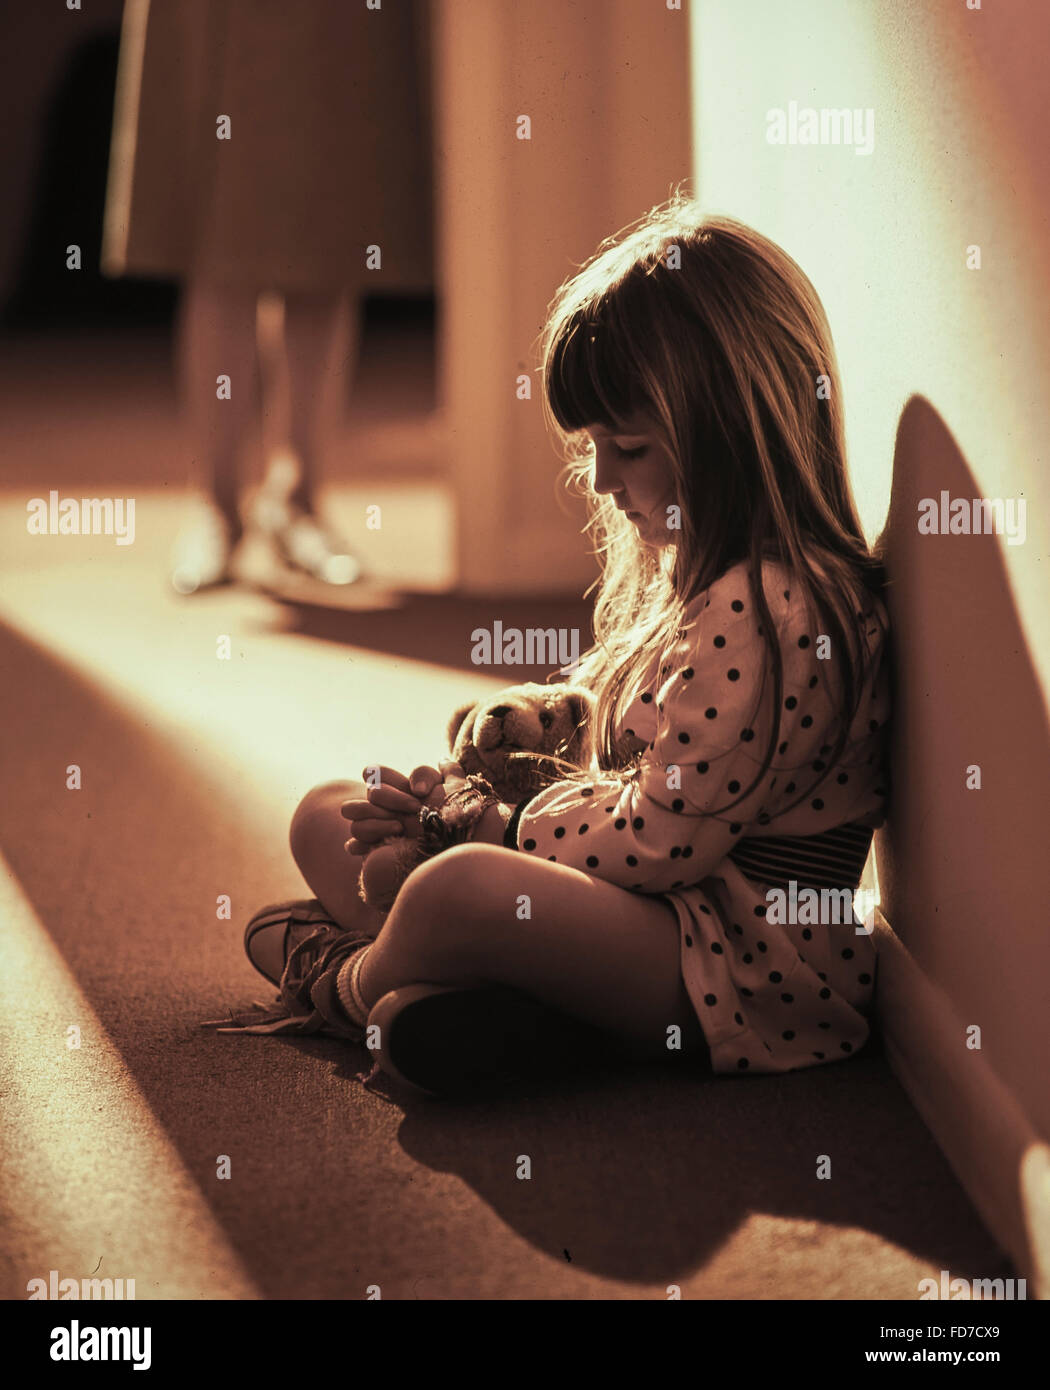 Adolescent sad girl sitting in hallway with stuffed animal Stock Photo